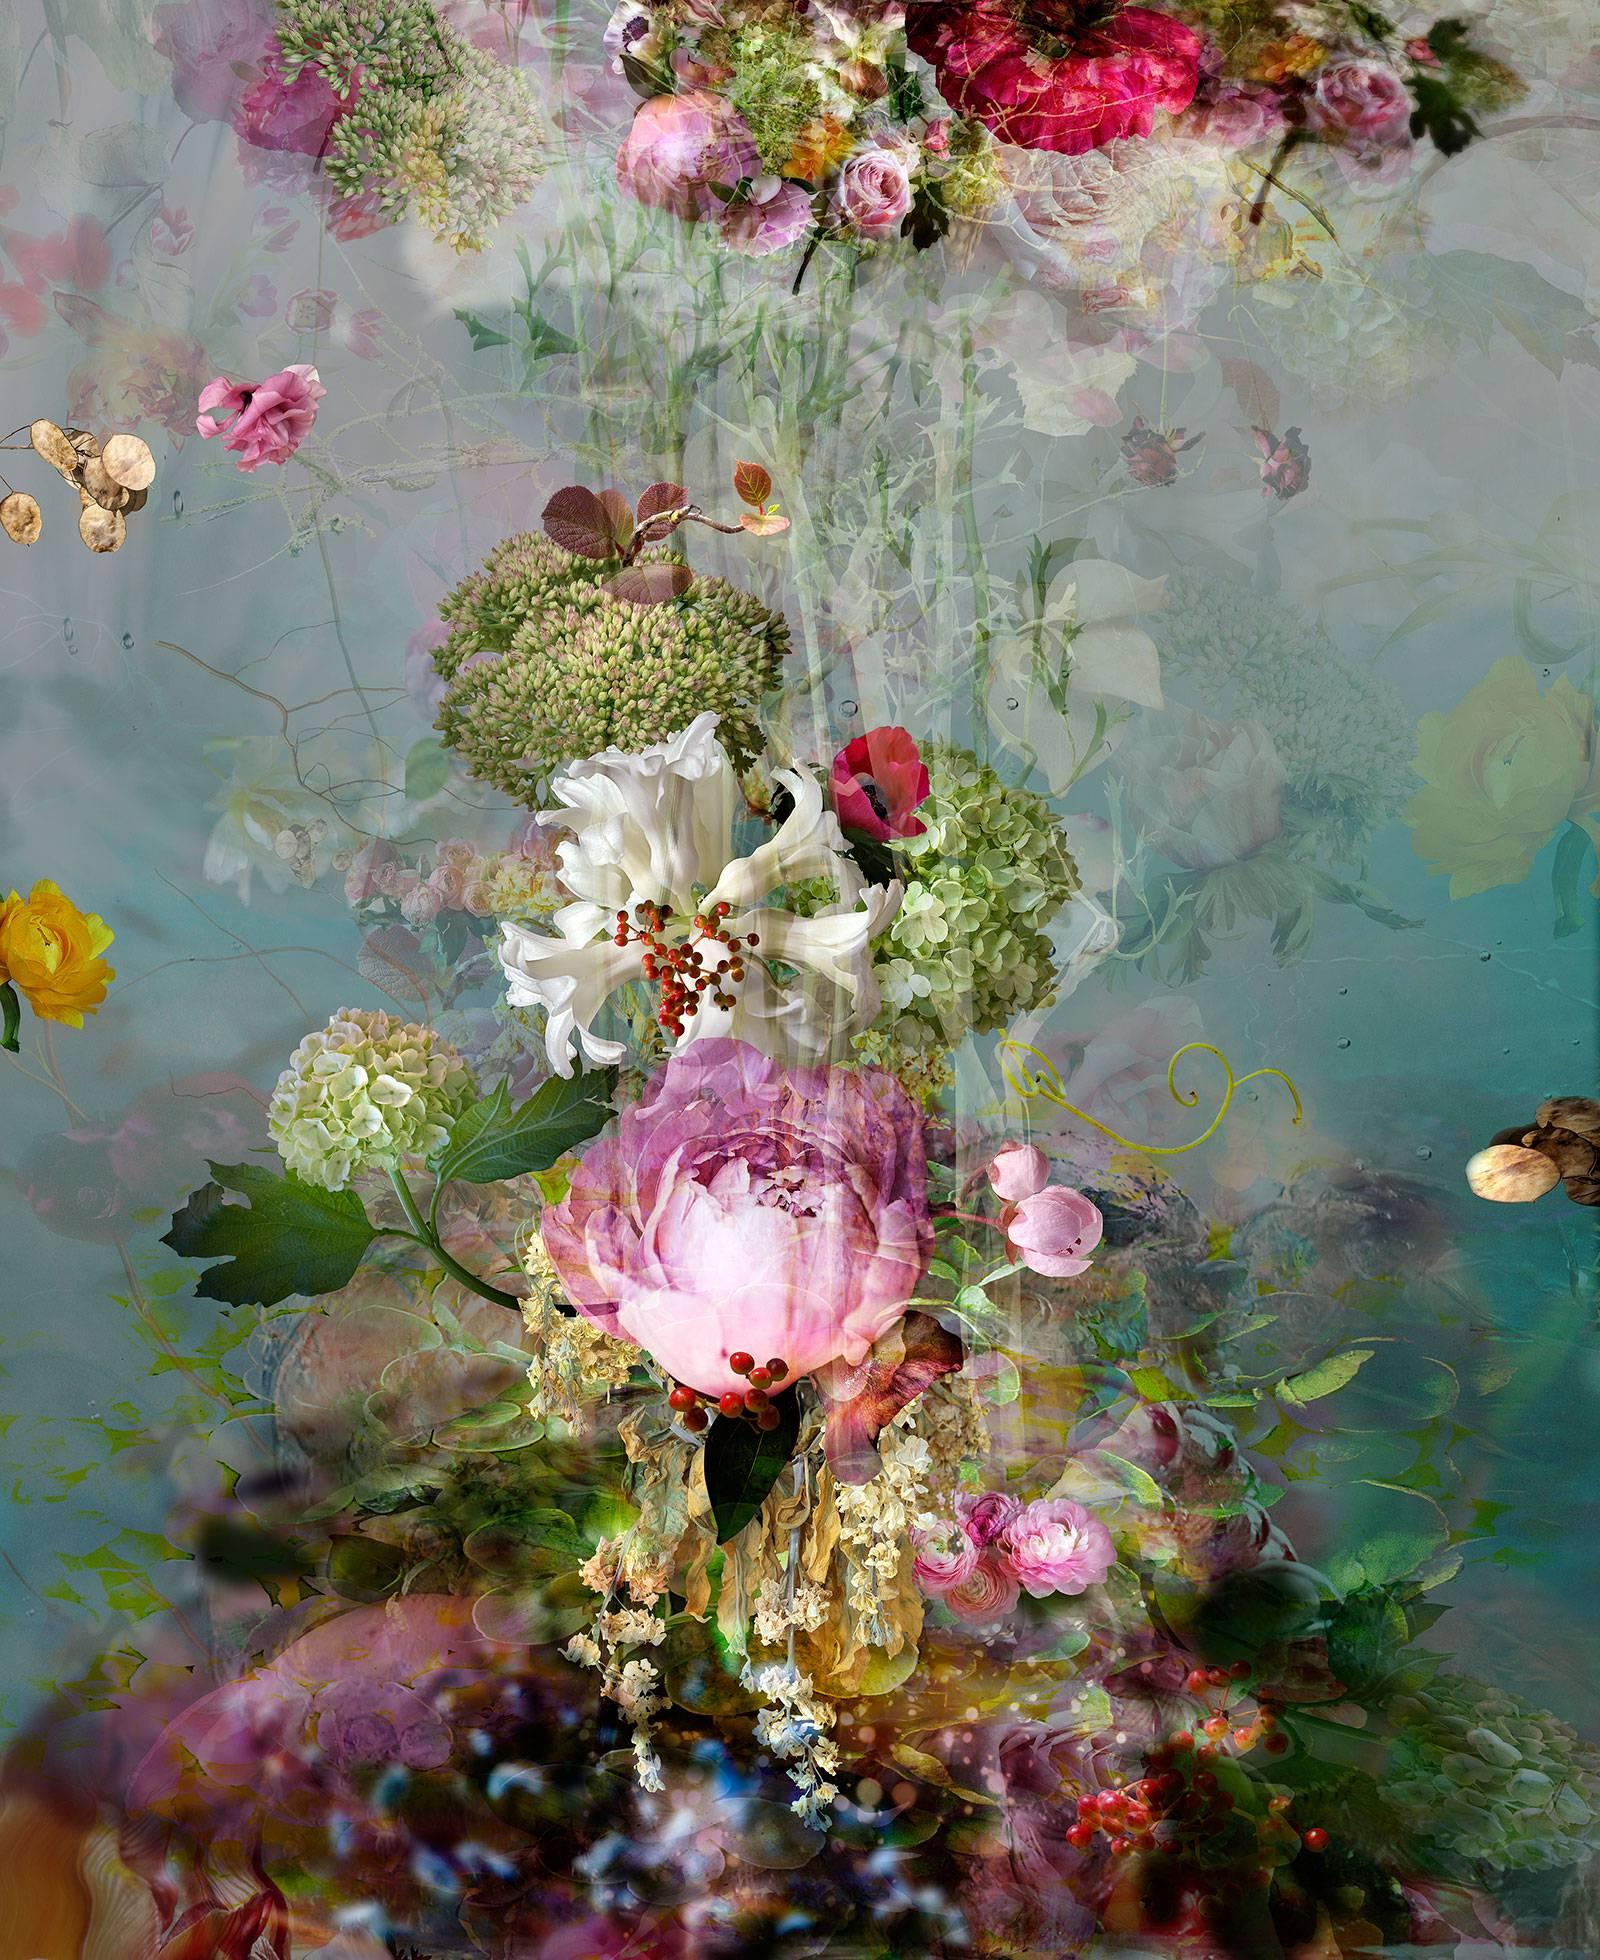 Isabelle Menin Still-Life Photograph - Sinking #3 - Floral still life contemporary photography